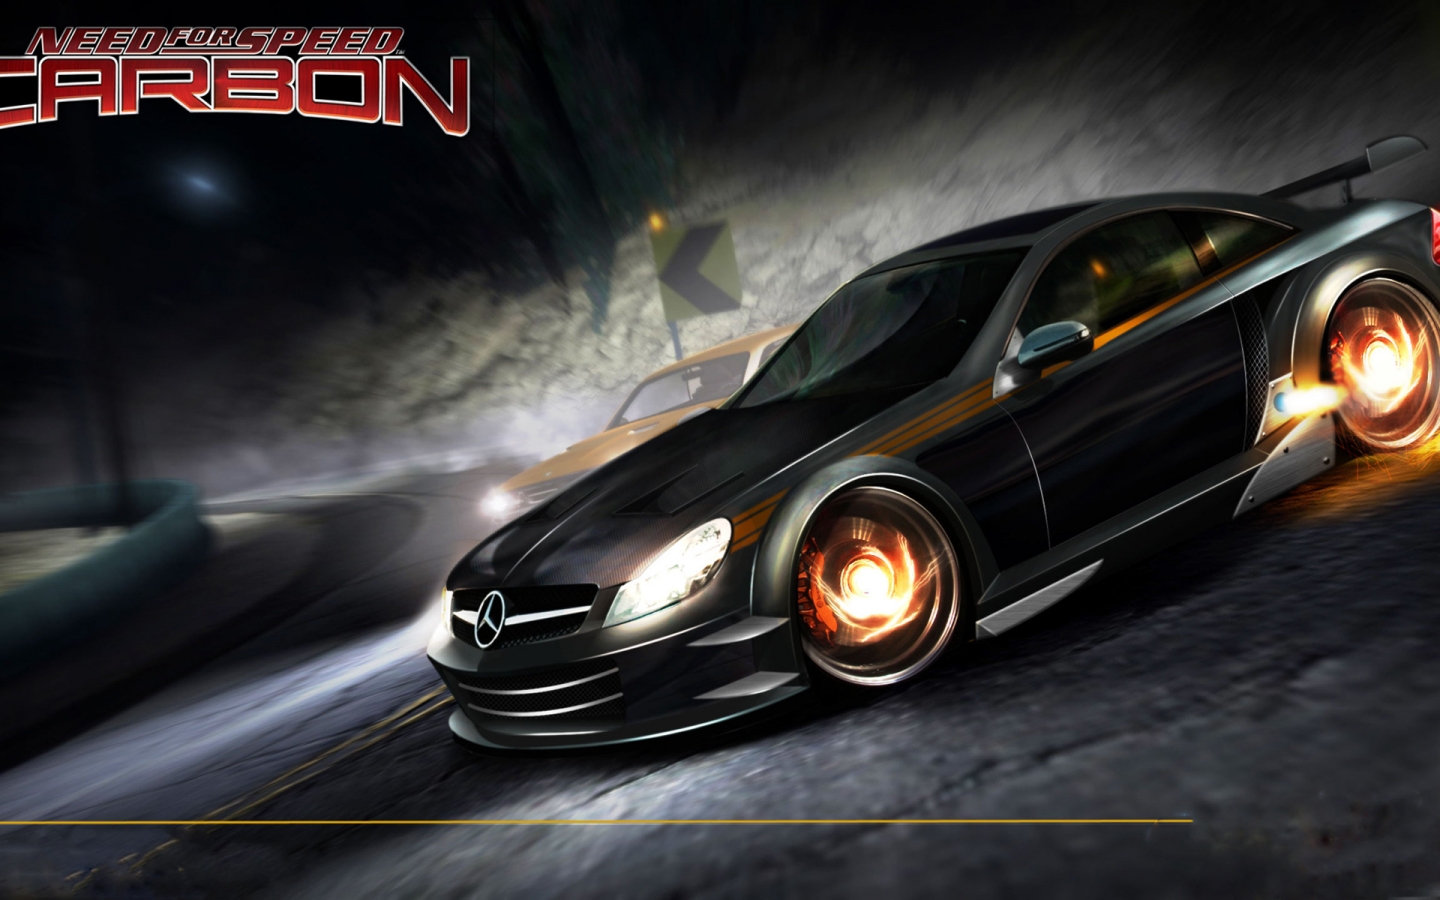 NFS Carbon Mercedes for 1440 x 900 widescreen resolution